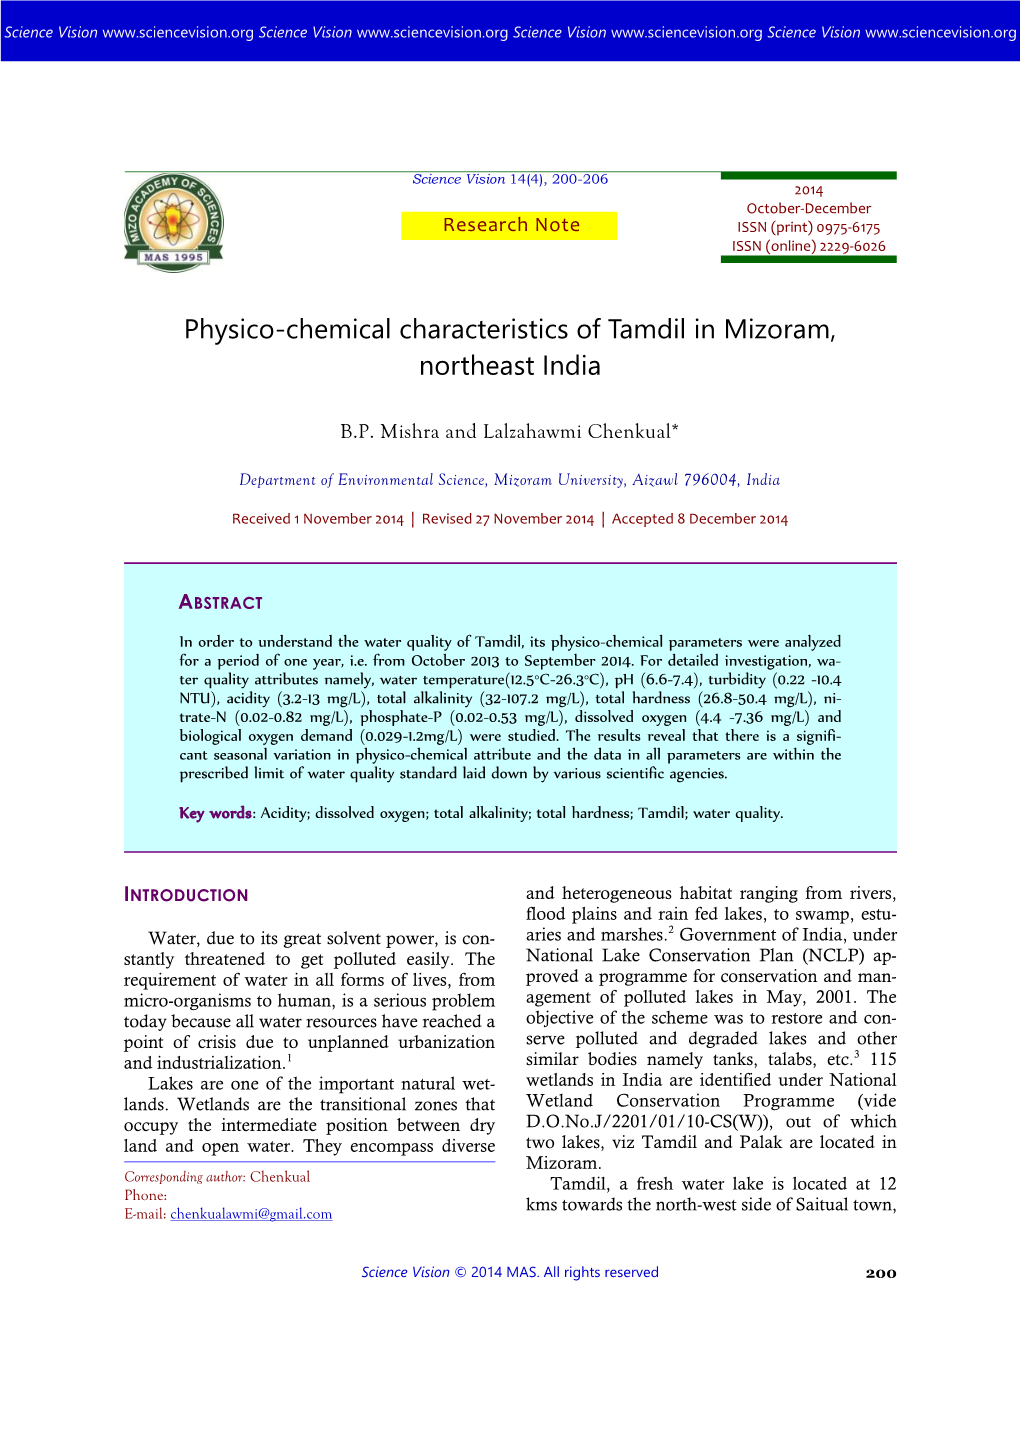 Physico-Chemical Characteristics of Tamdil in Mizoram, Northeast India